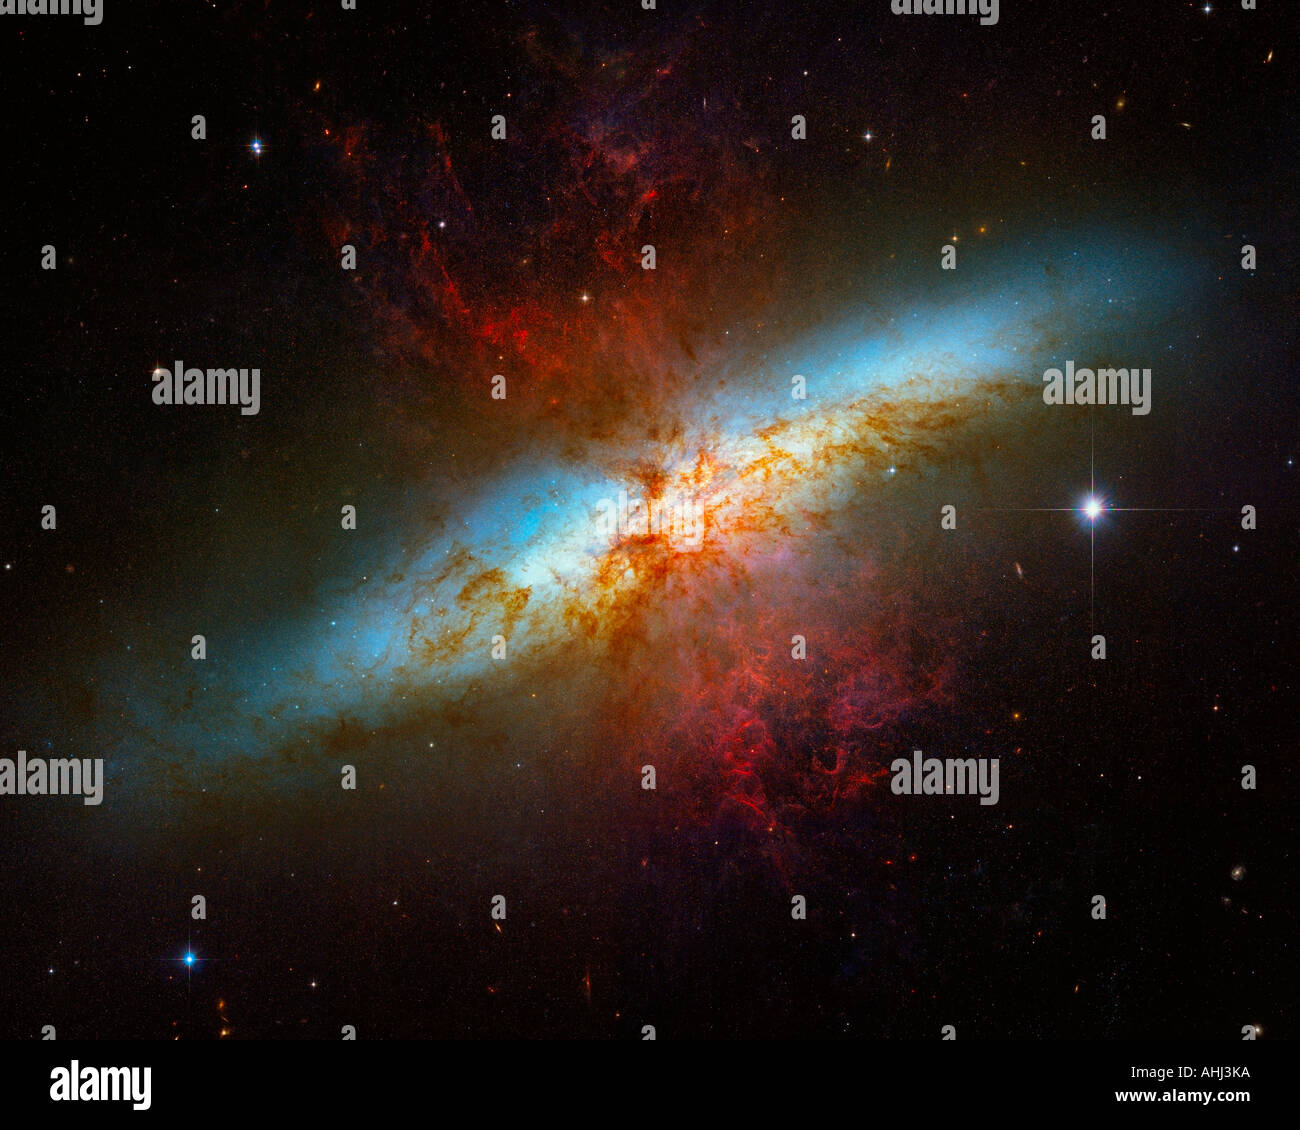 STARBURST GALAXY M82 HUBBLE SPACE TELESCOPE 8x10 SILVER HALIDE PHOTO PRINT 